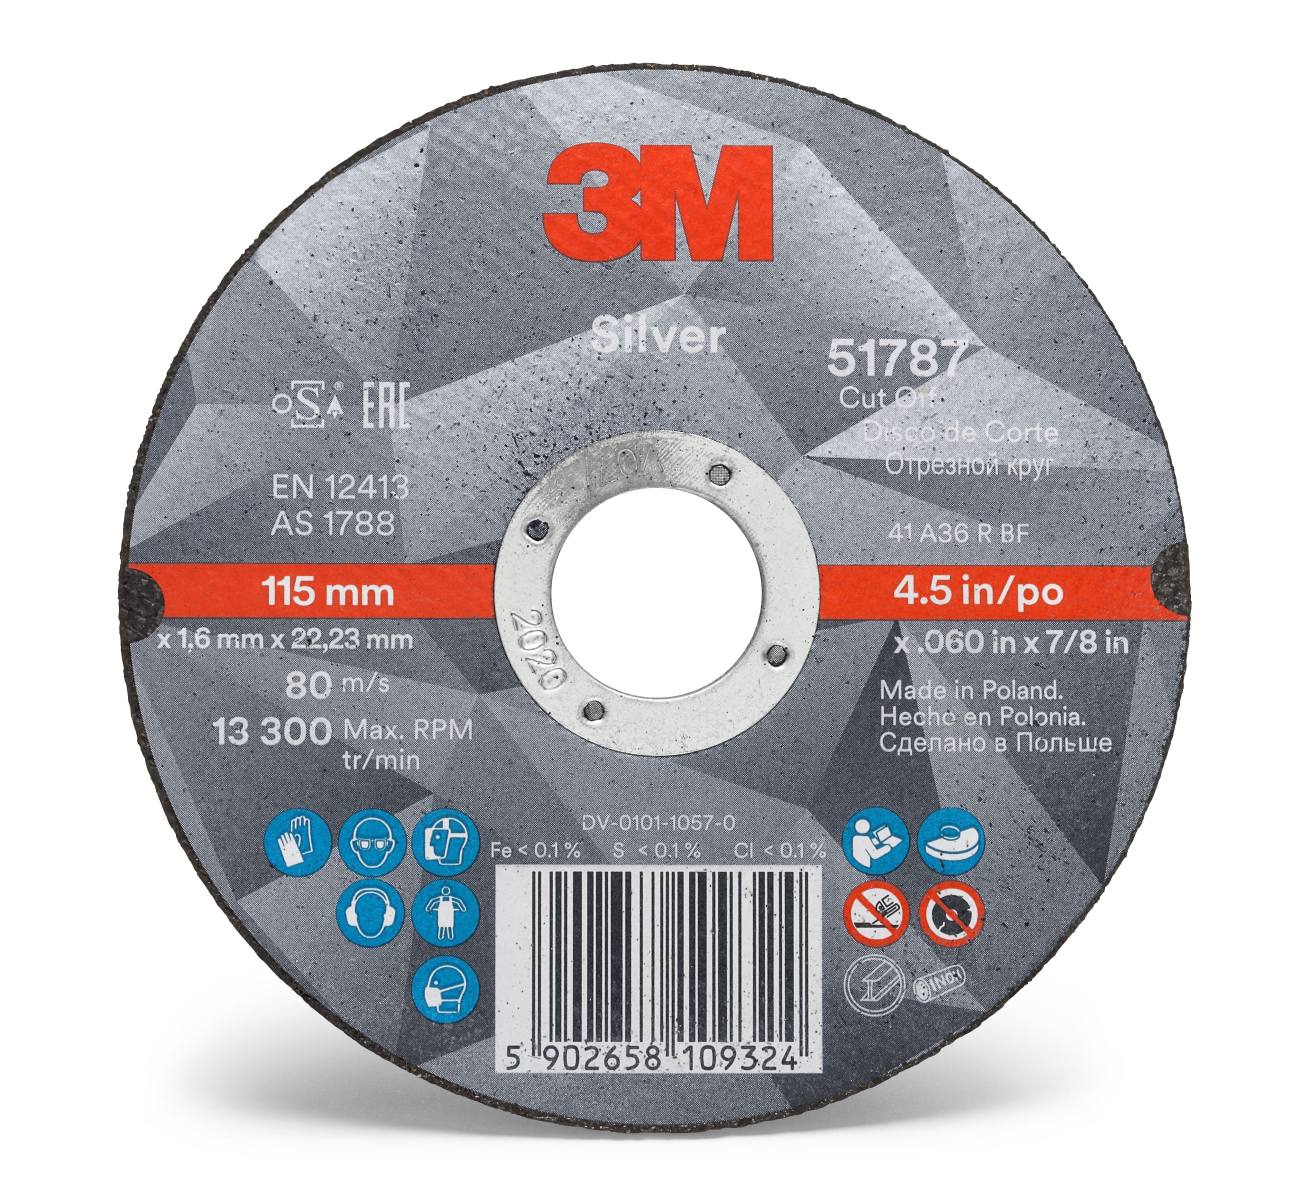 3M Silver Cut-Off Wheel Trennscheibe, 125 mm, 1,0 mm, 22,23 mm, T41, 51790